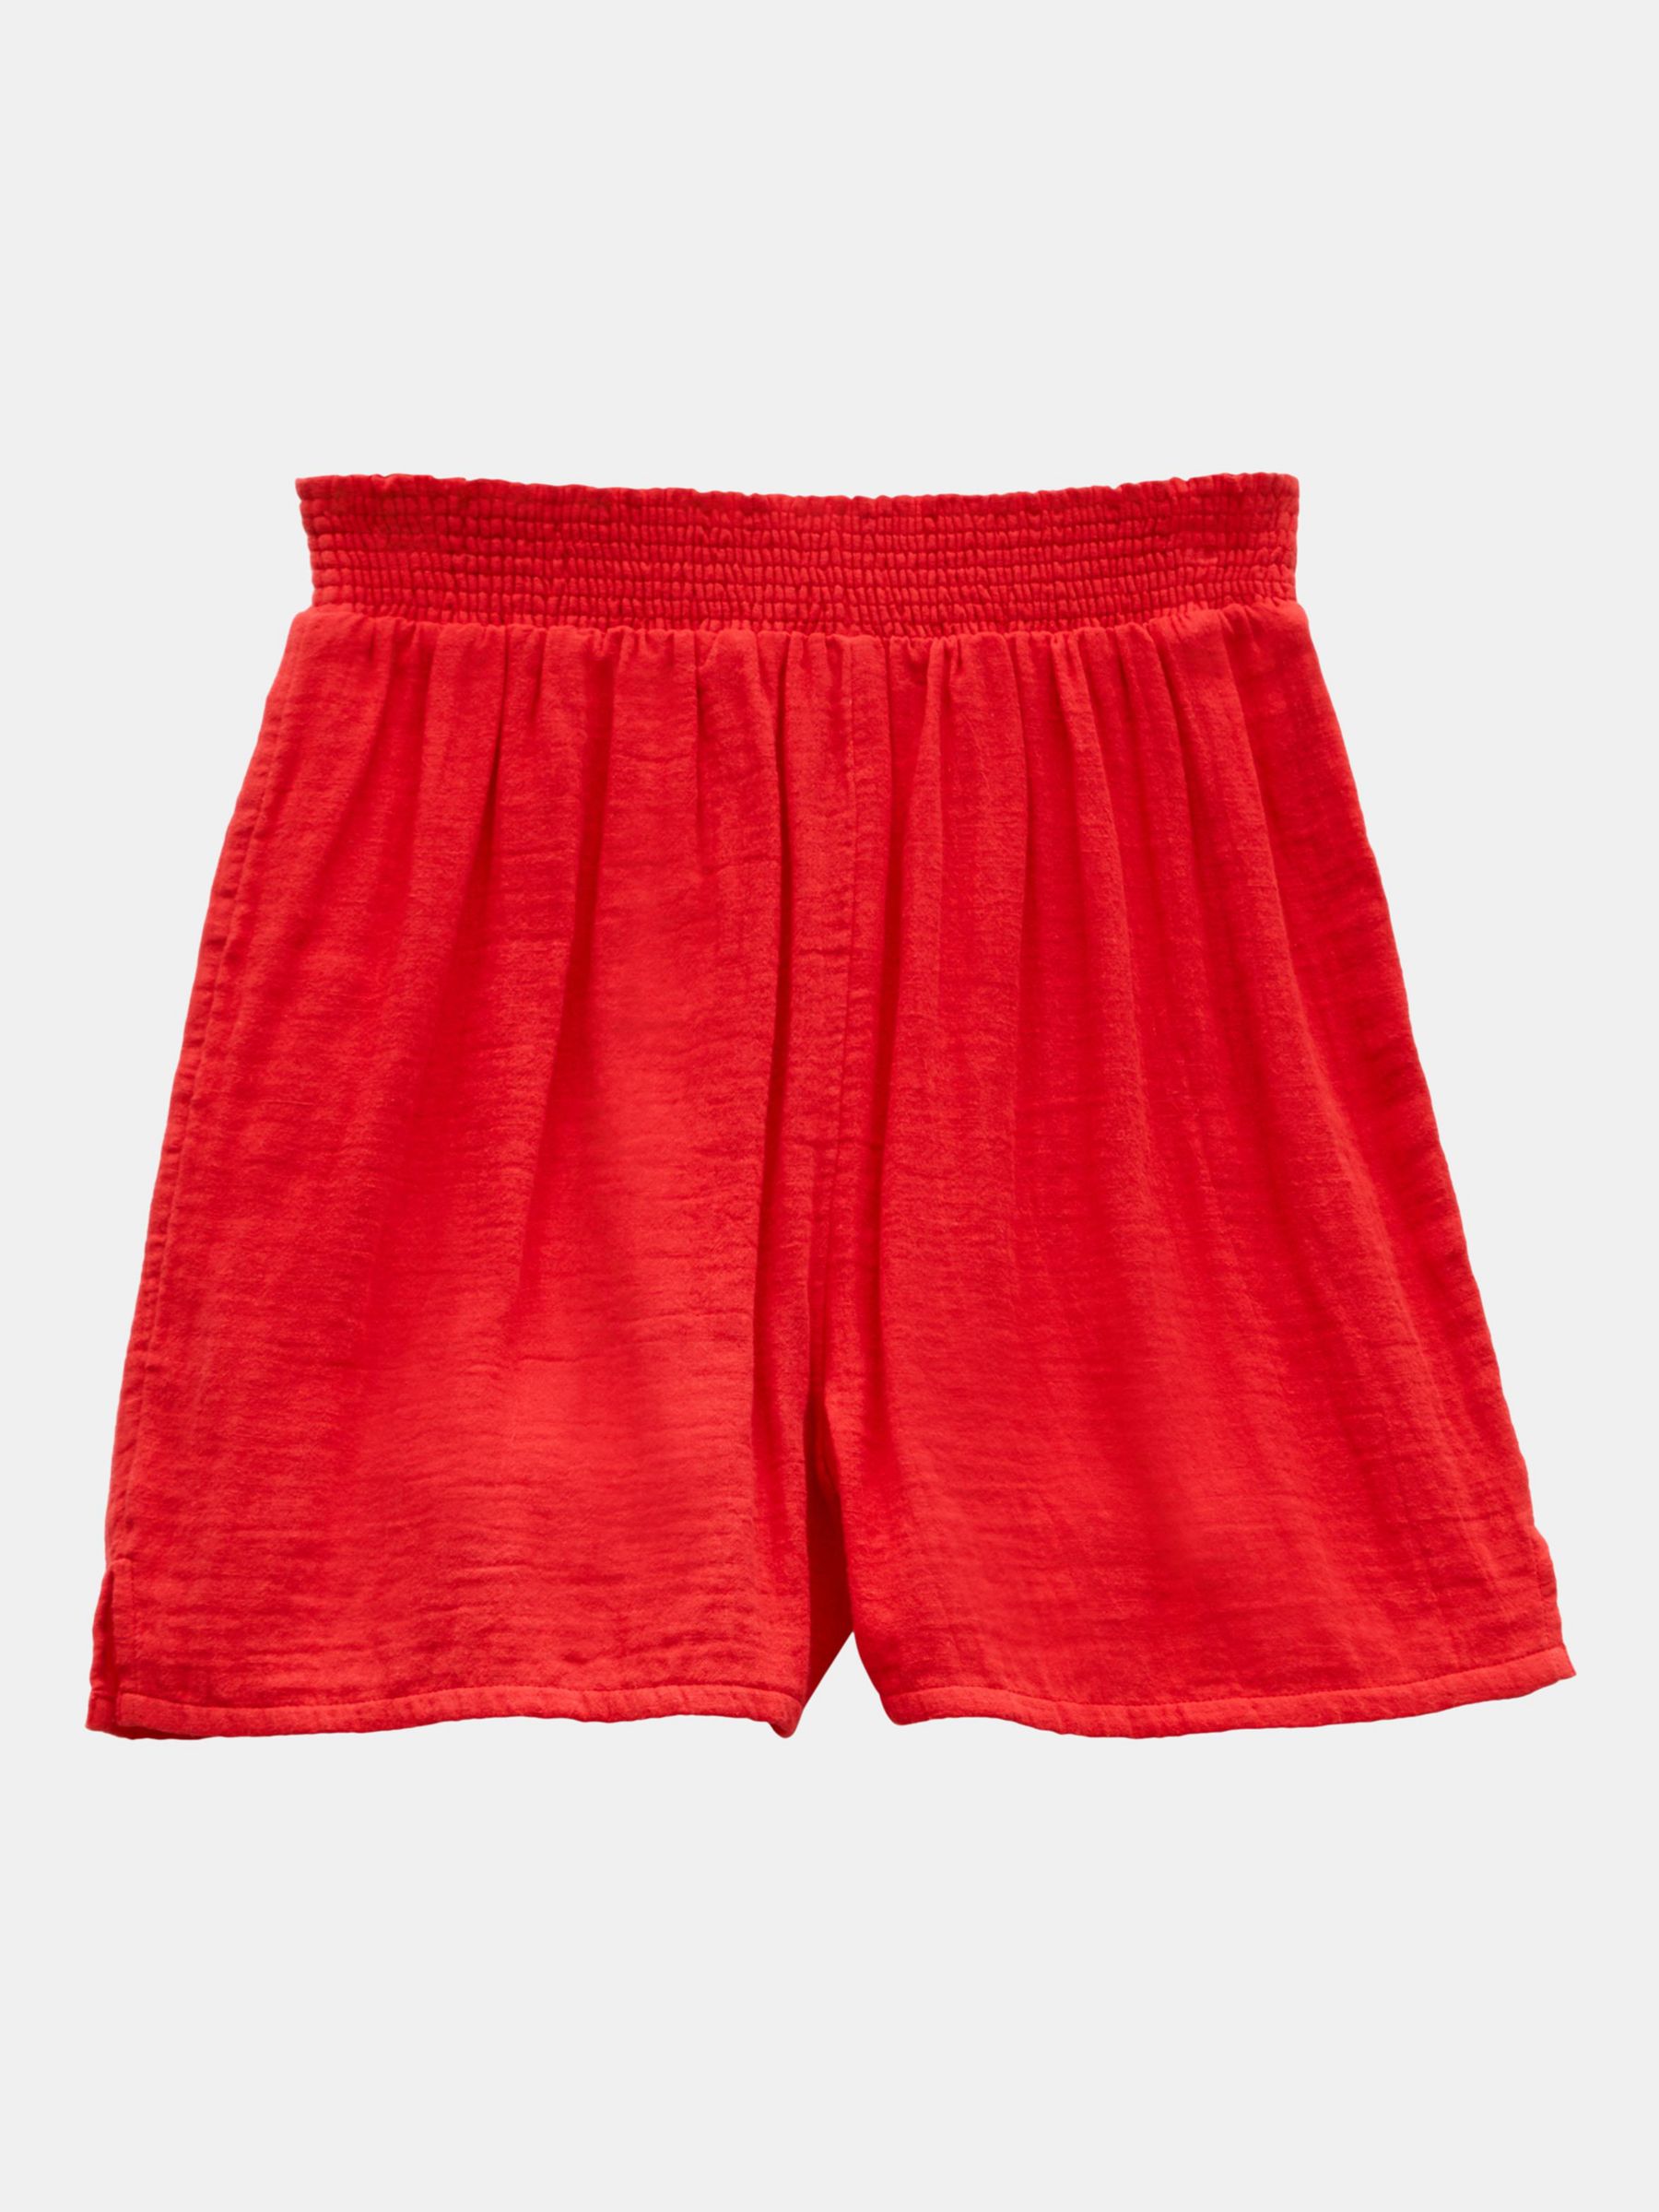 HUSH Mira Beach Shorts, Redcoat, L